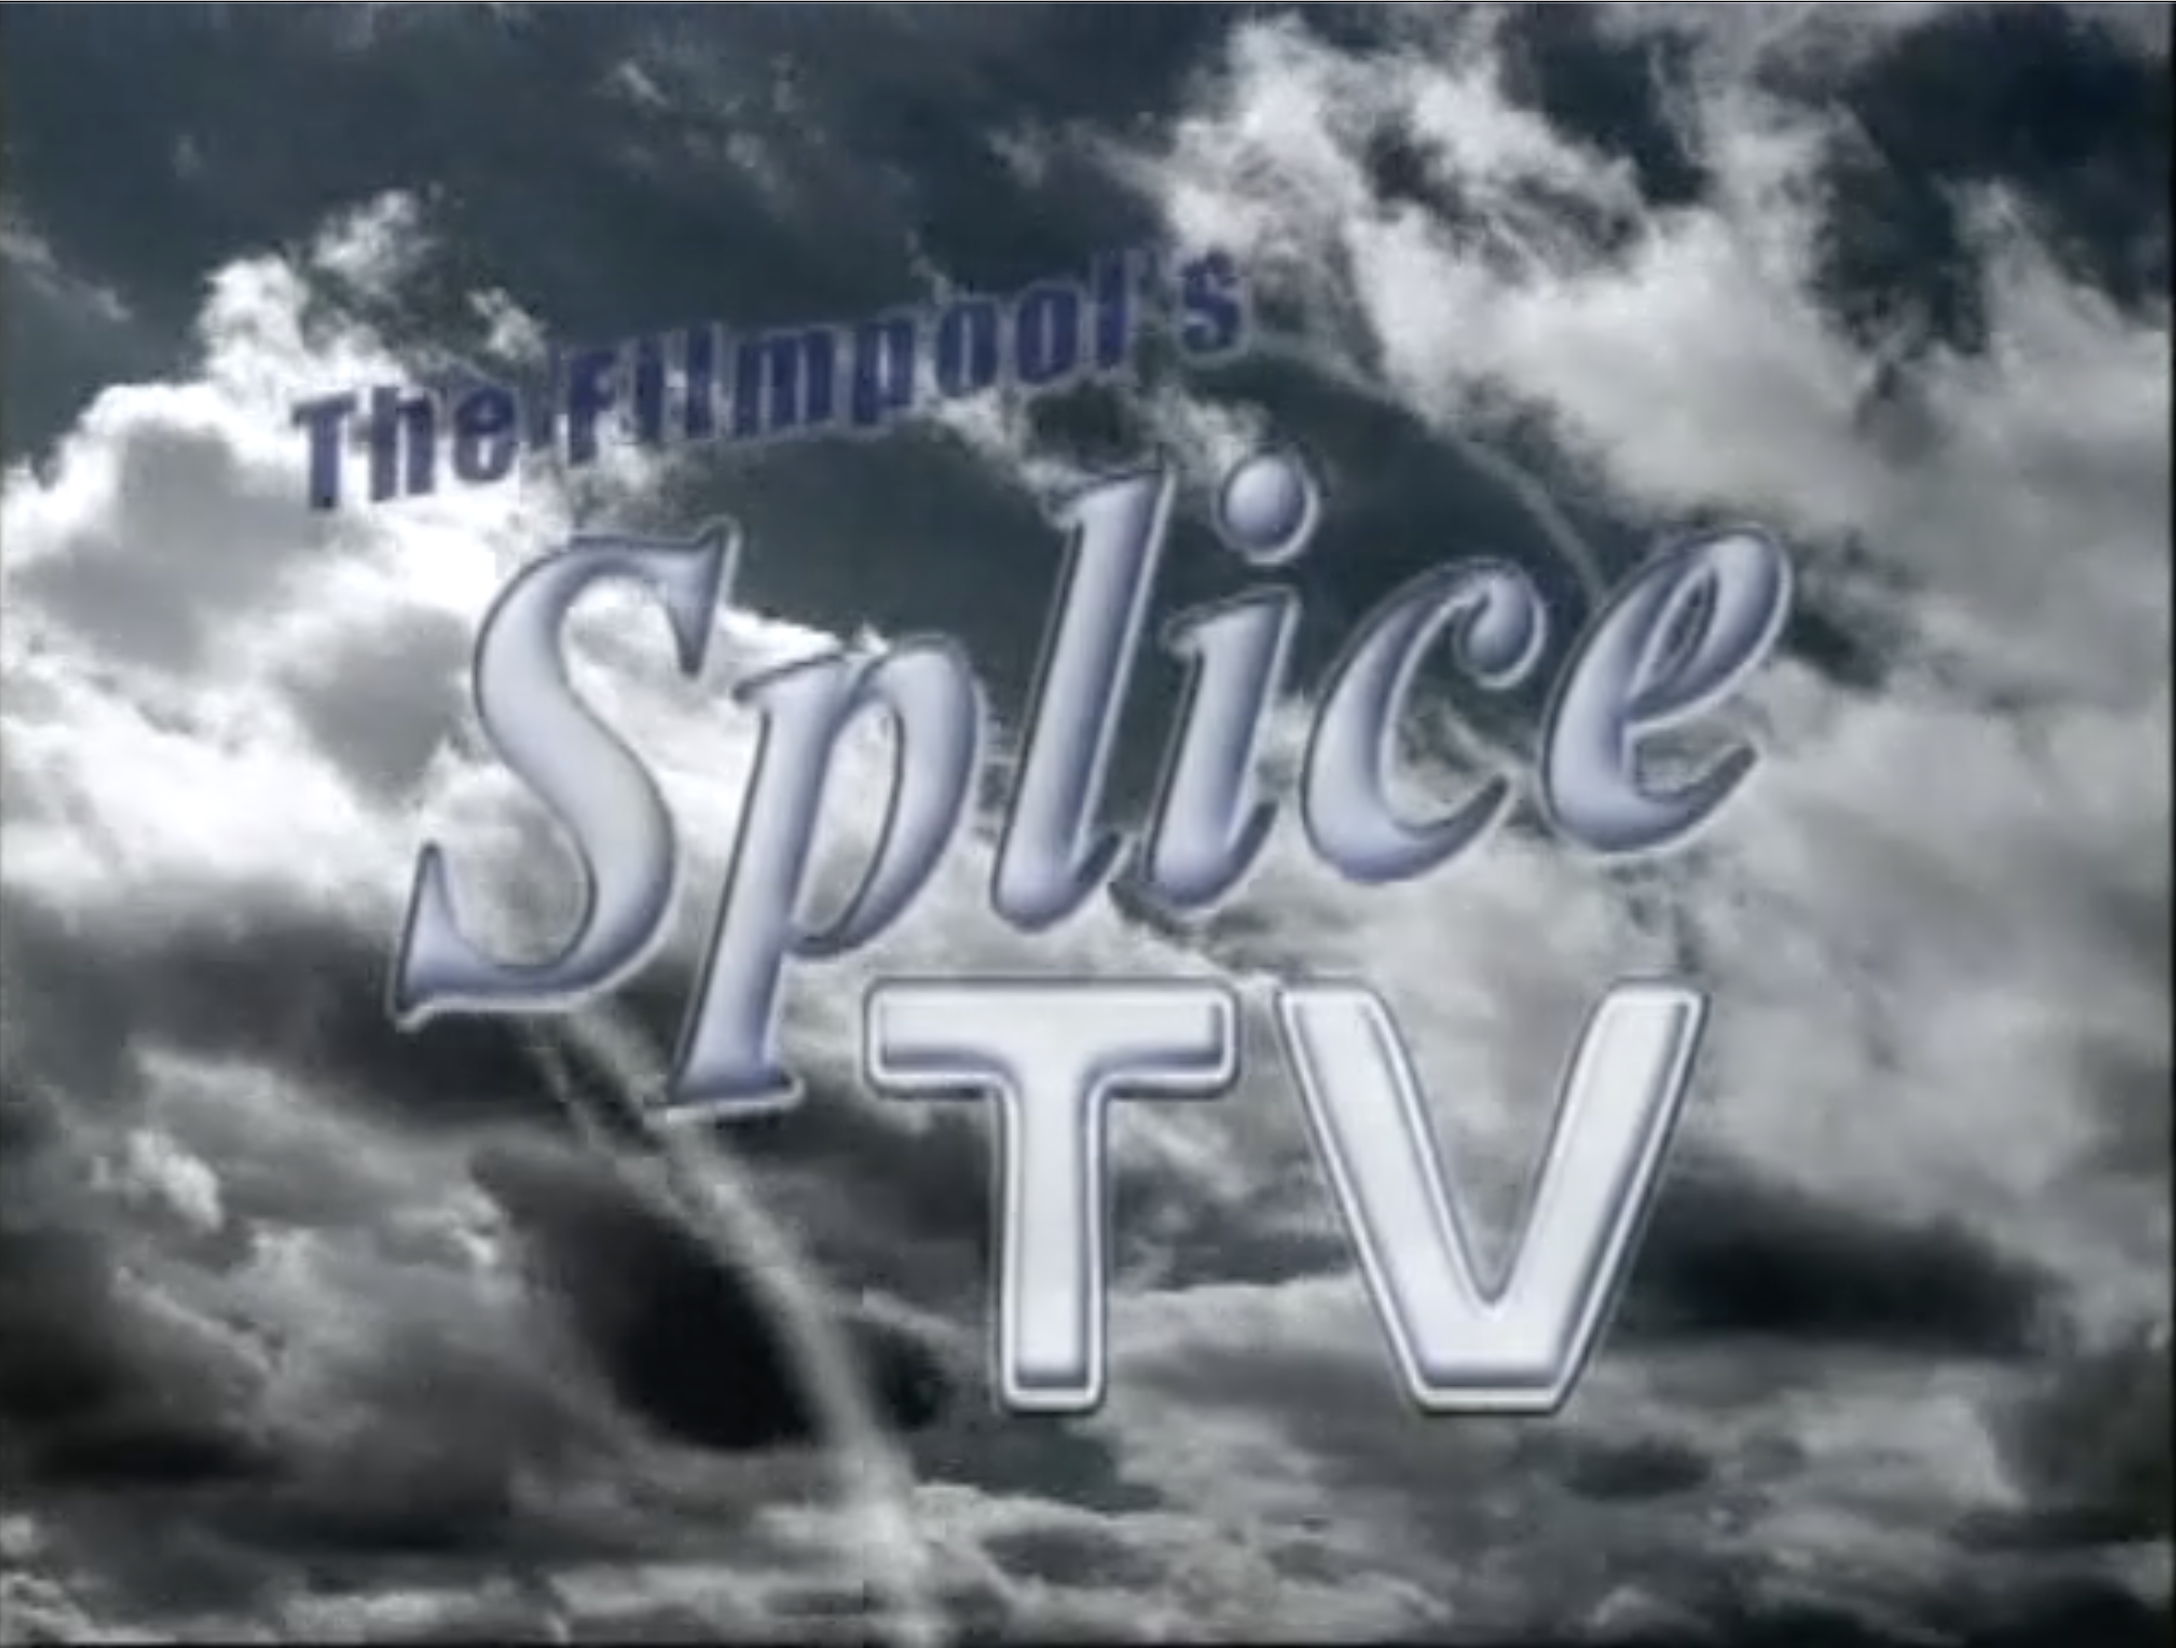 Main title from 2004 Splice TV "Super8" episode. | Source: Splice TV